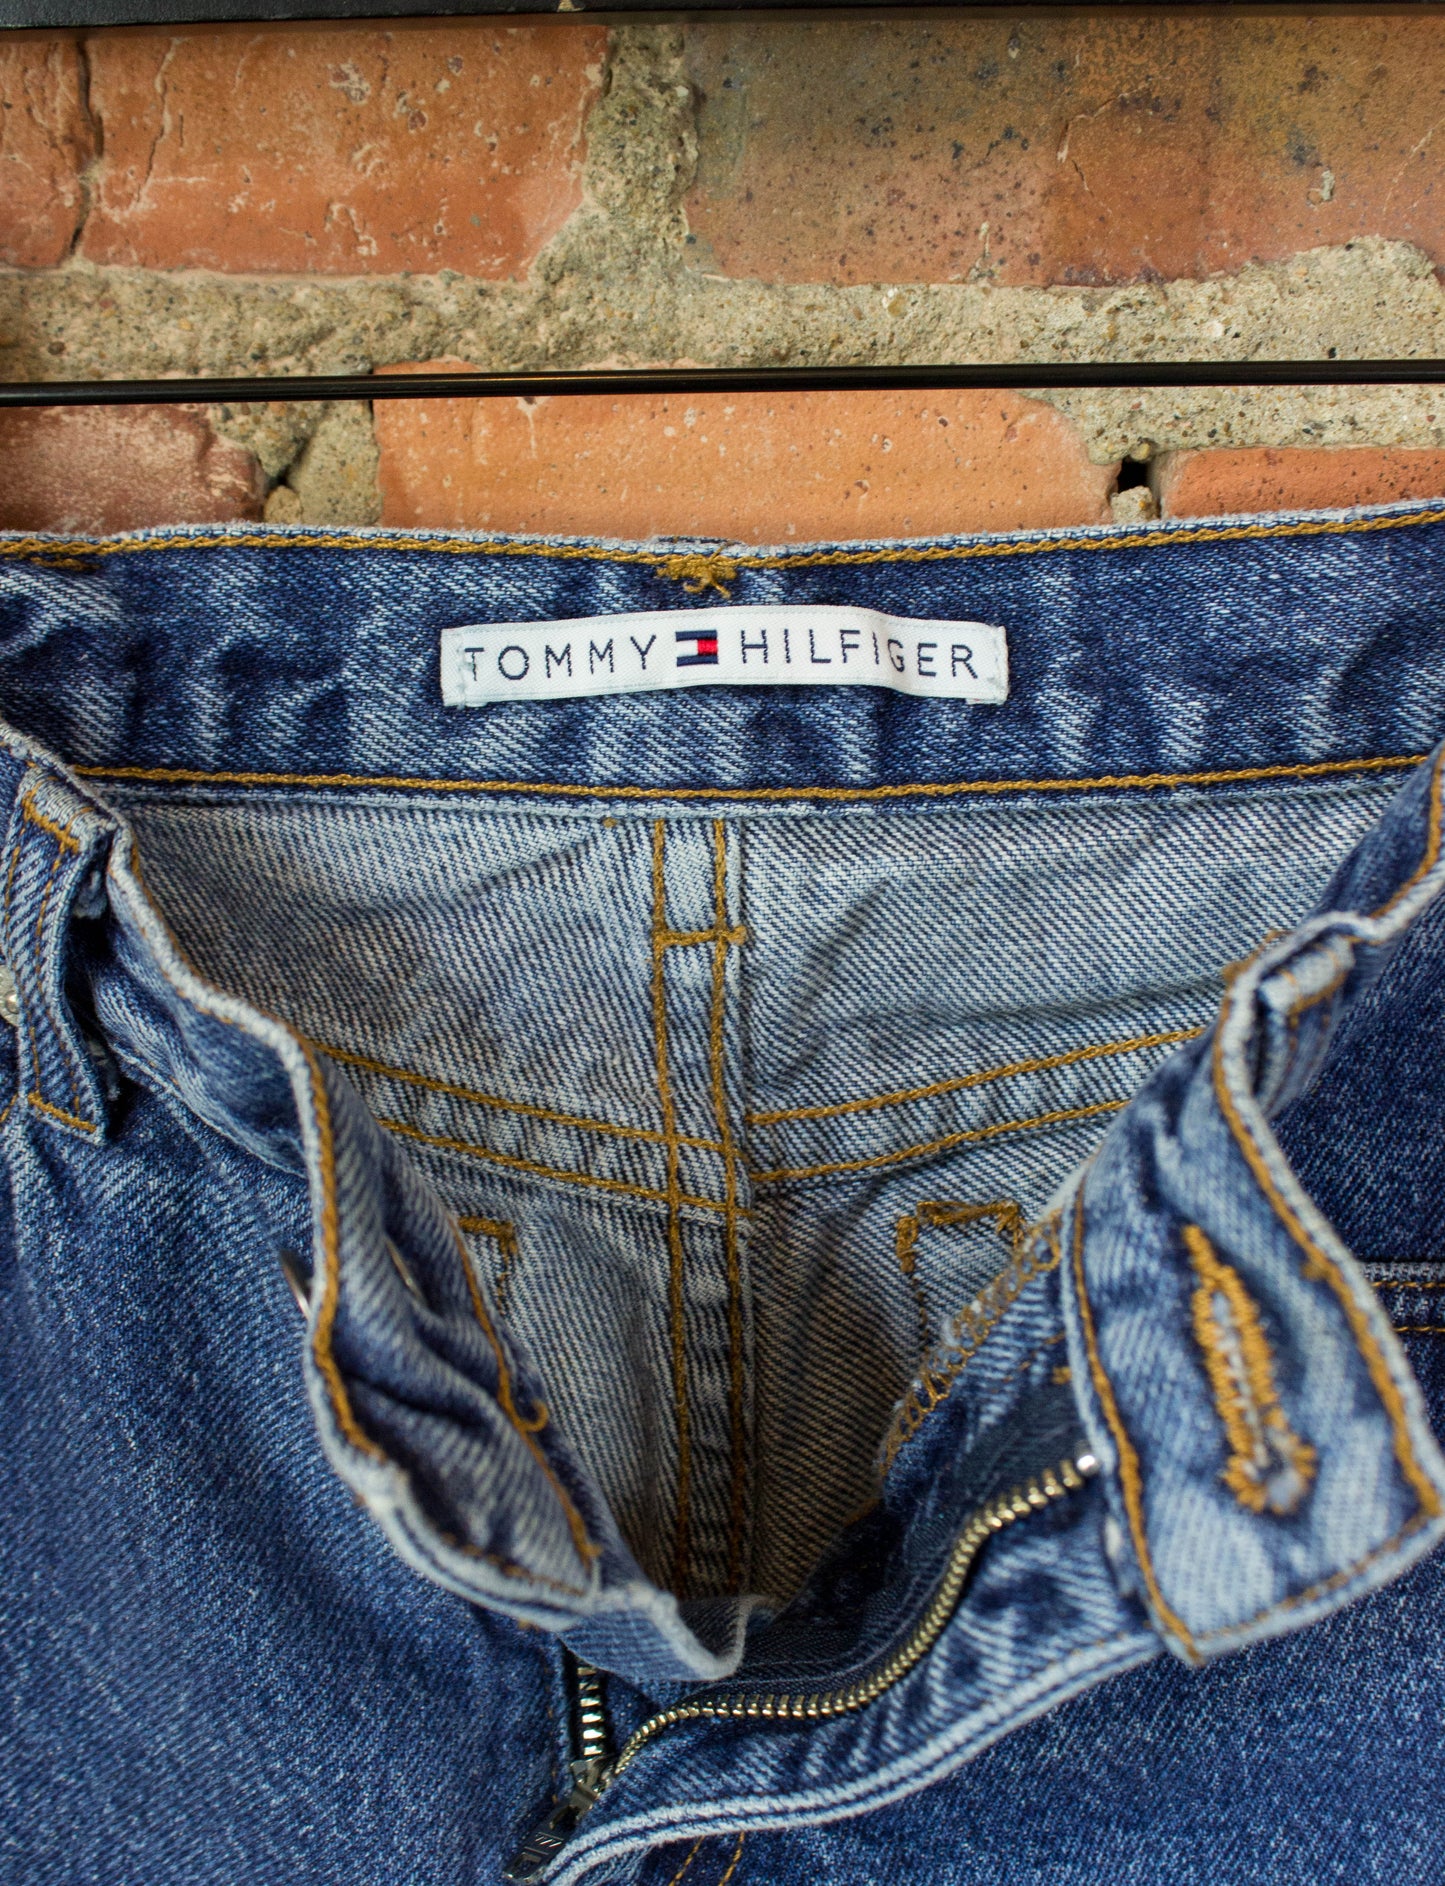 Vintage Tommy Hilfiger Cut Off Denim Shorts 90s Leather Flag Patch 26 Waist